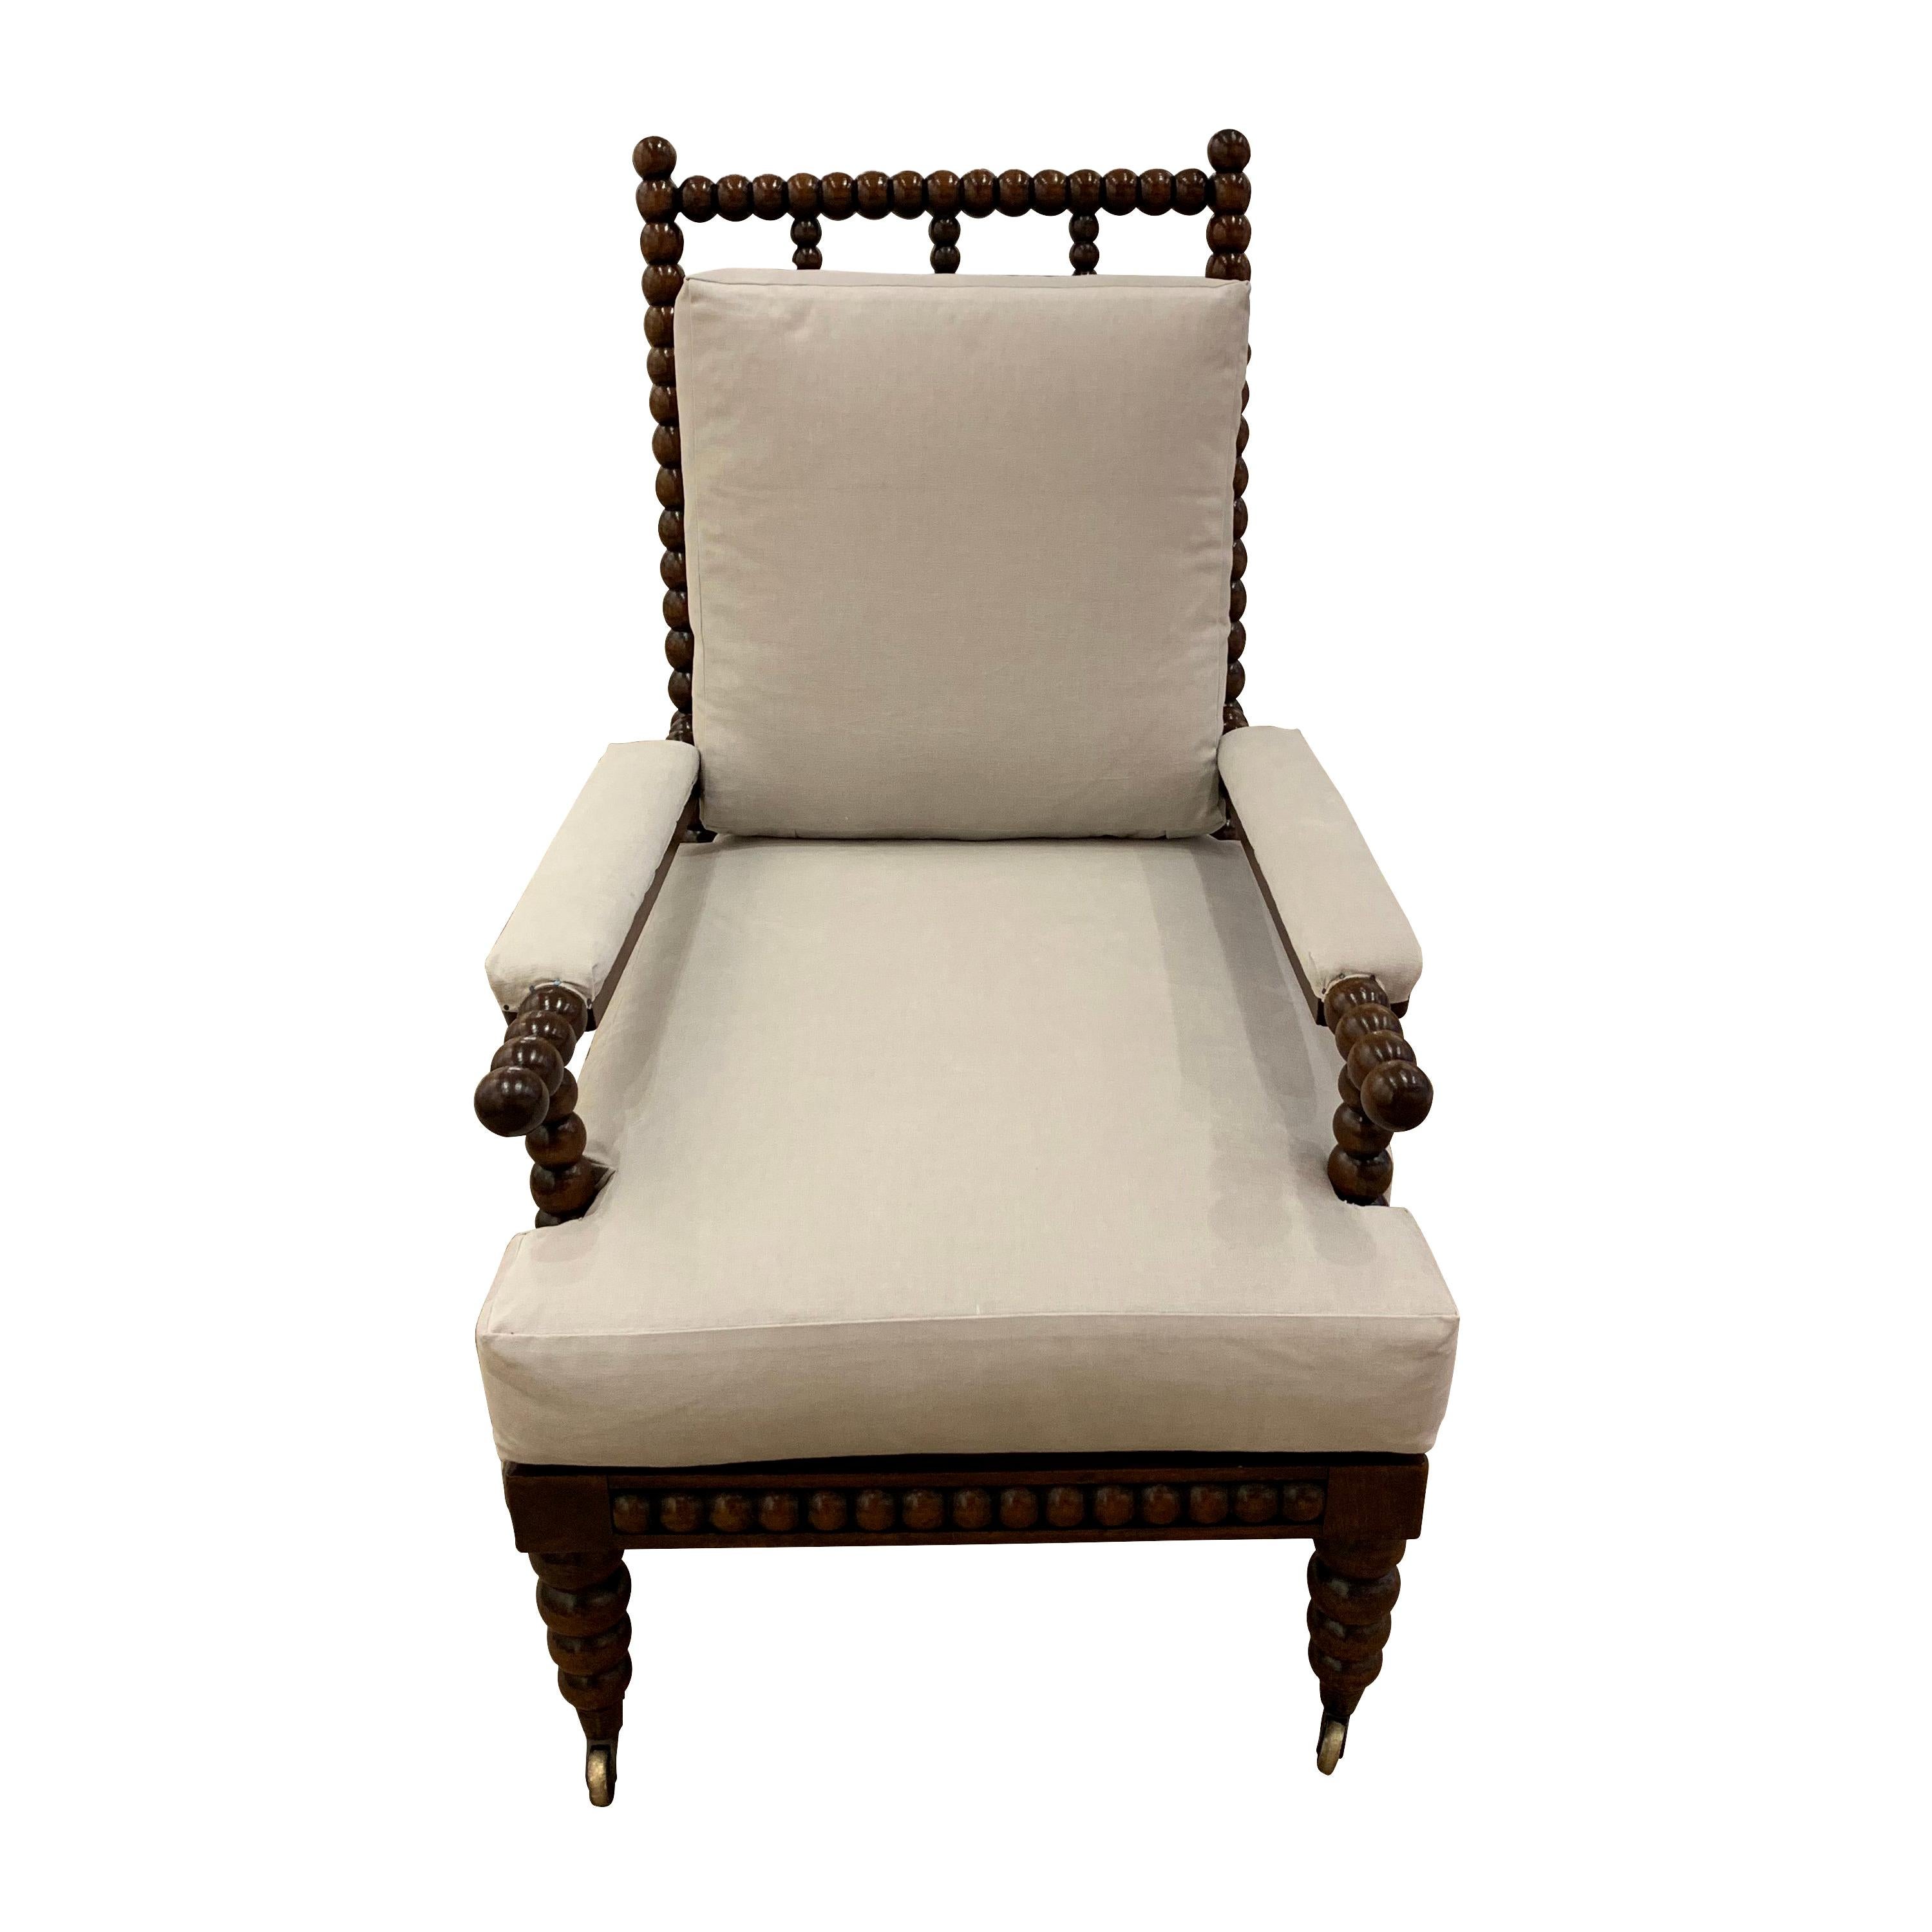 Upholstered Bobbin Chair, England, 19th Century